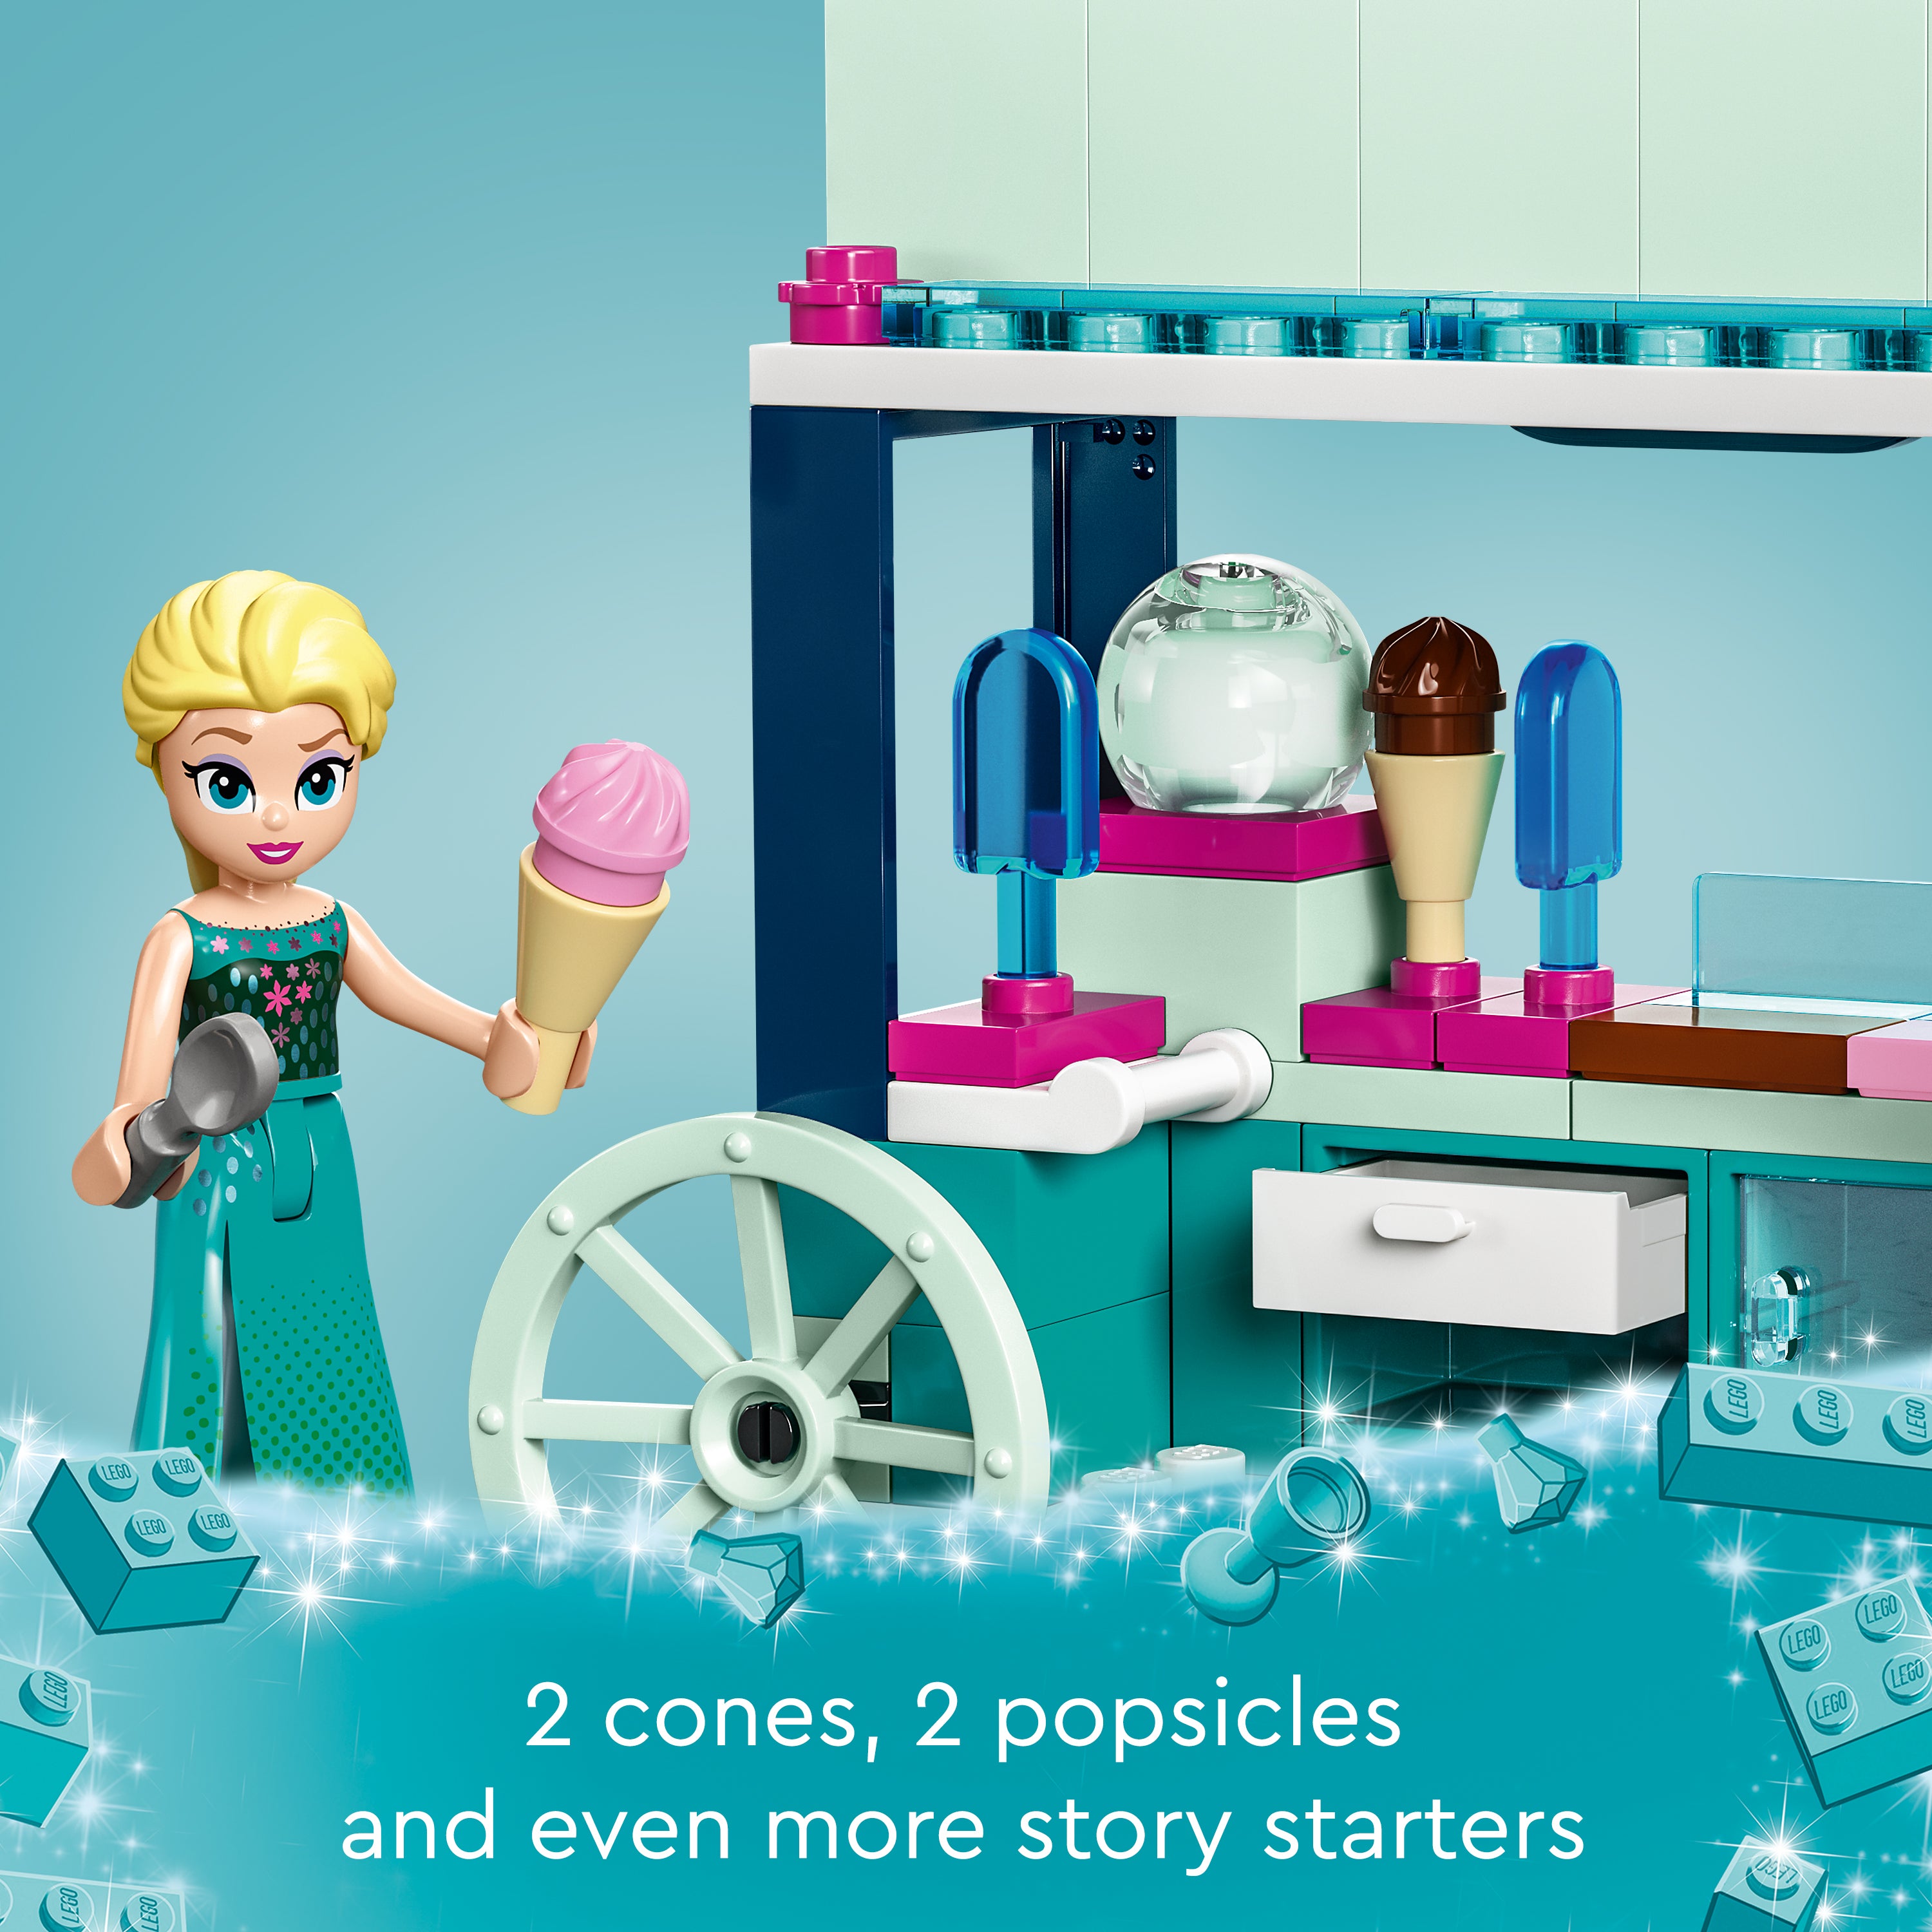 Lego 43234 Elsas Frozen Treats Set